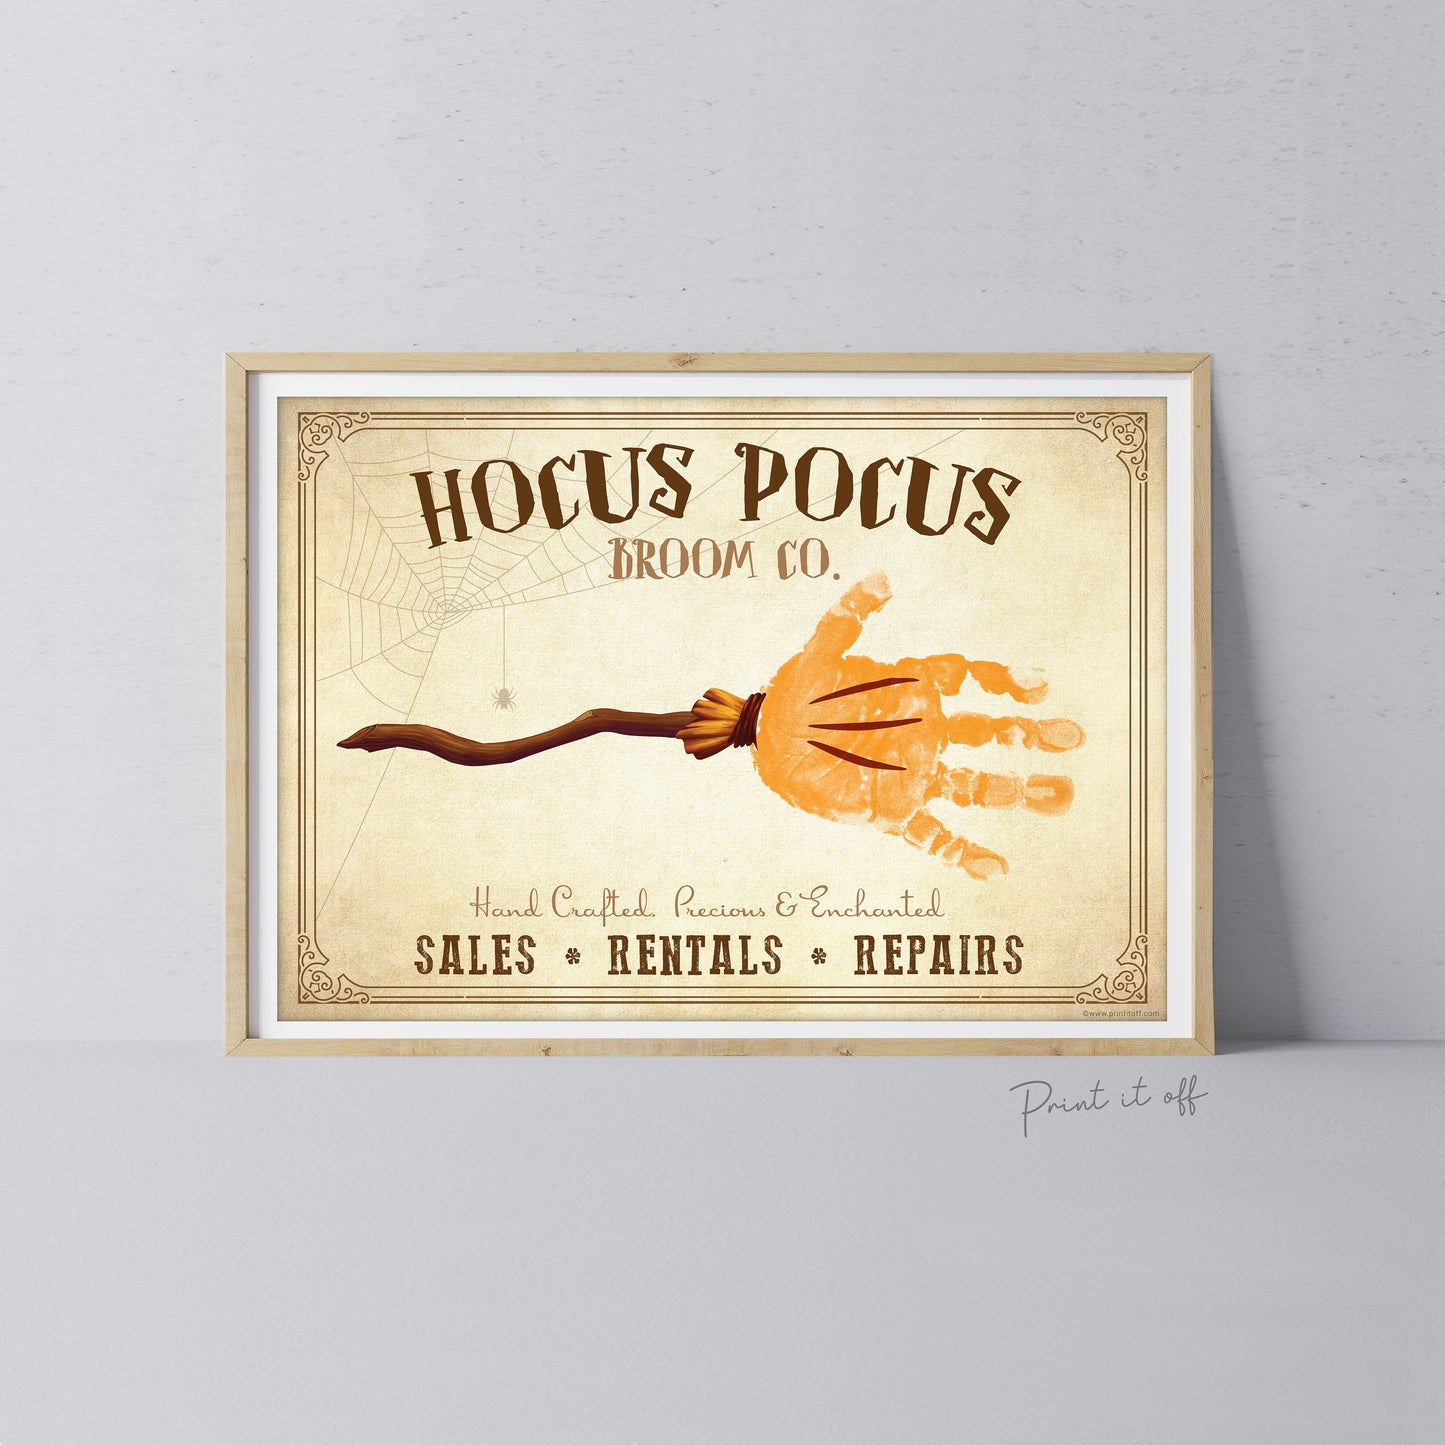 Hocus Pocus Handprint Art Craft / Witch Broom Stick Halloween Sign / Kids Baby Toddler Keepsake Activity Memory / Print It Off 0766